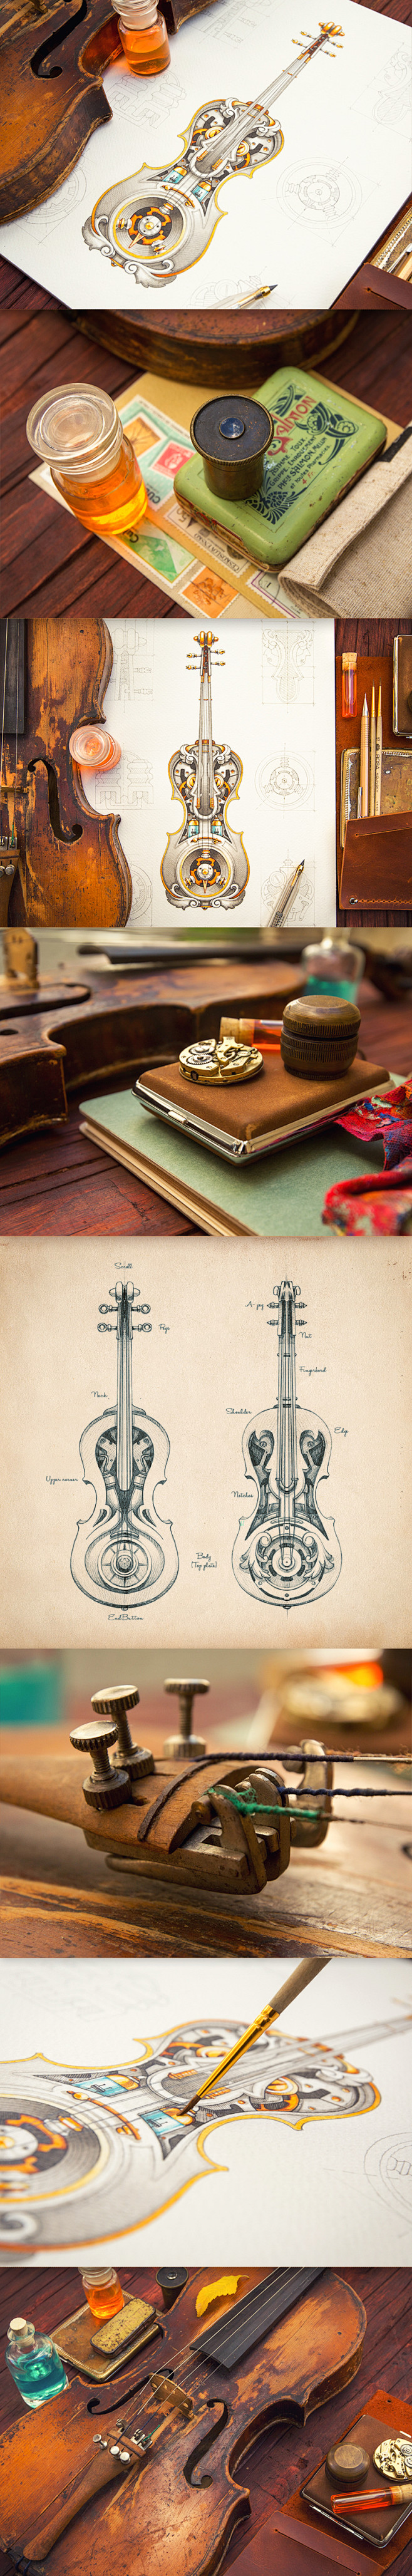 Steampunk violin